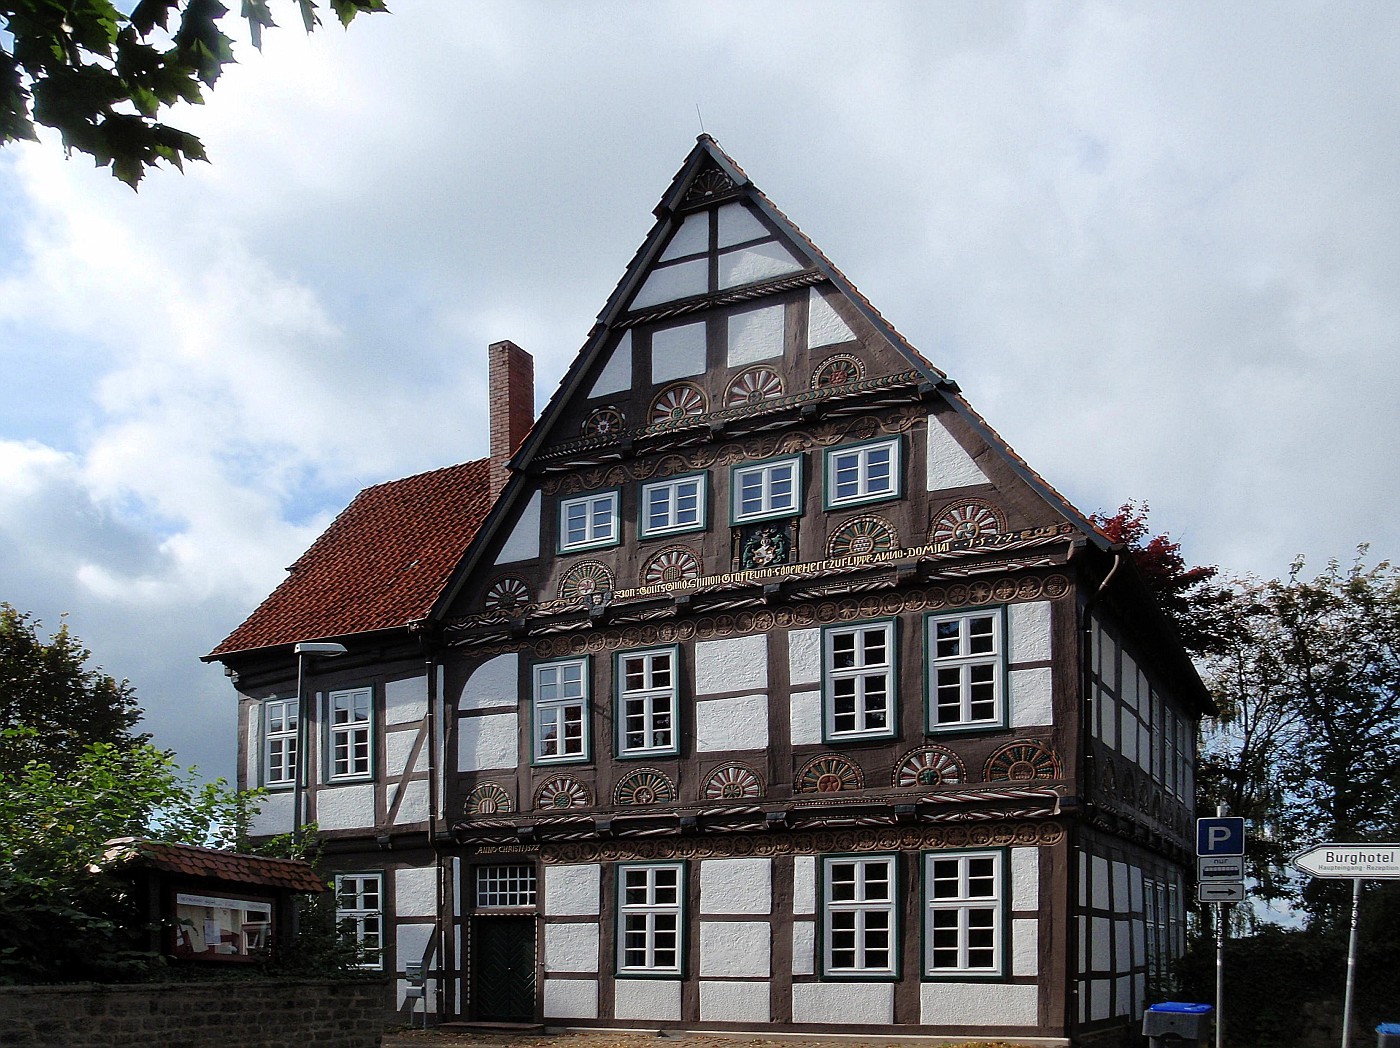 Altes Amtshaus am Pideritplatz